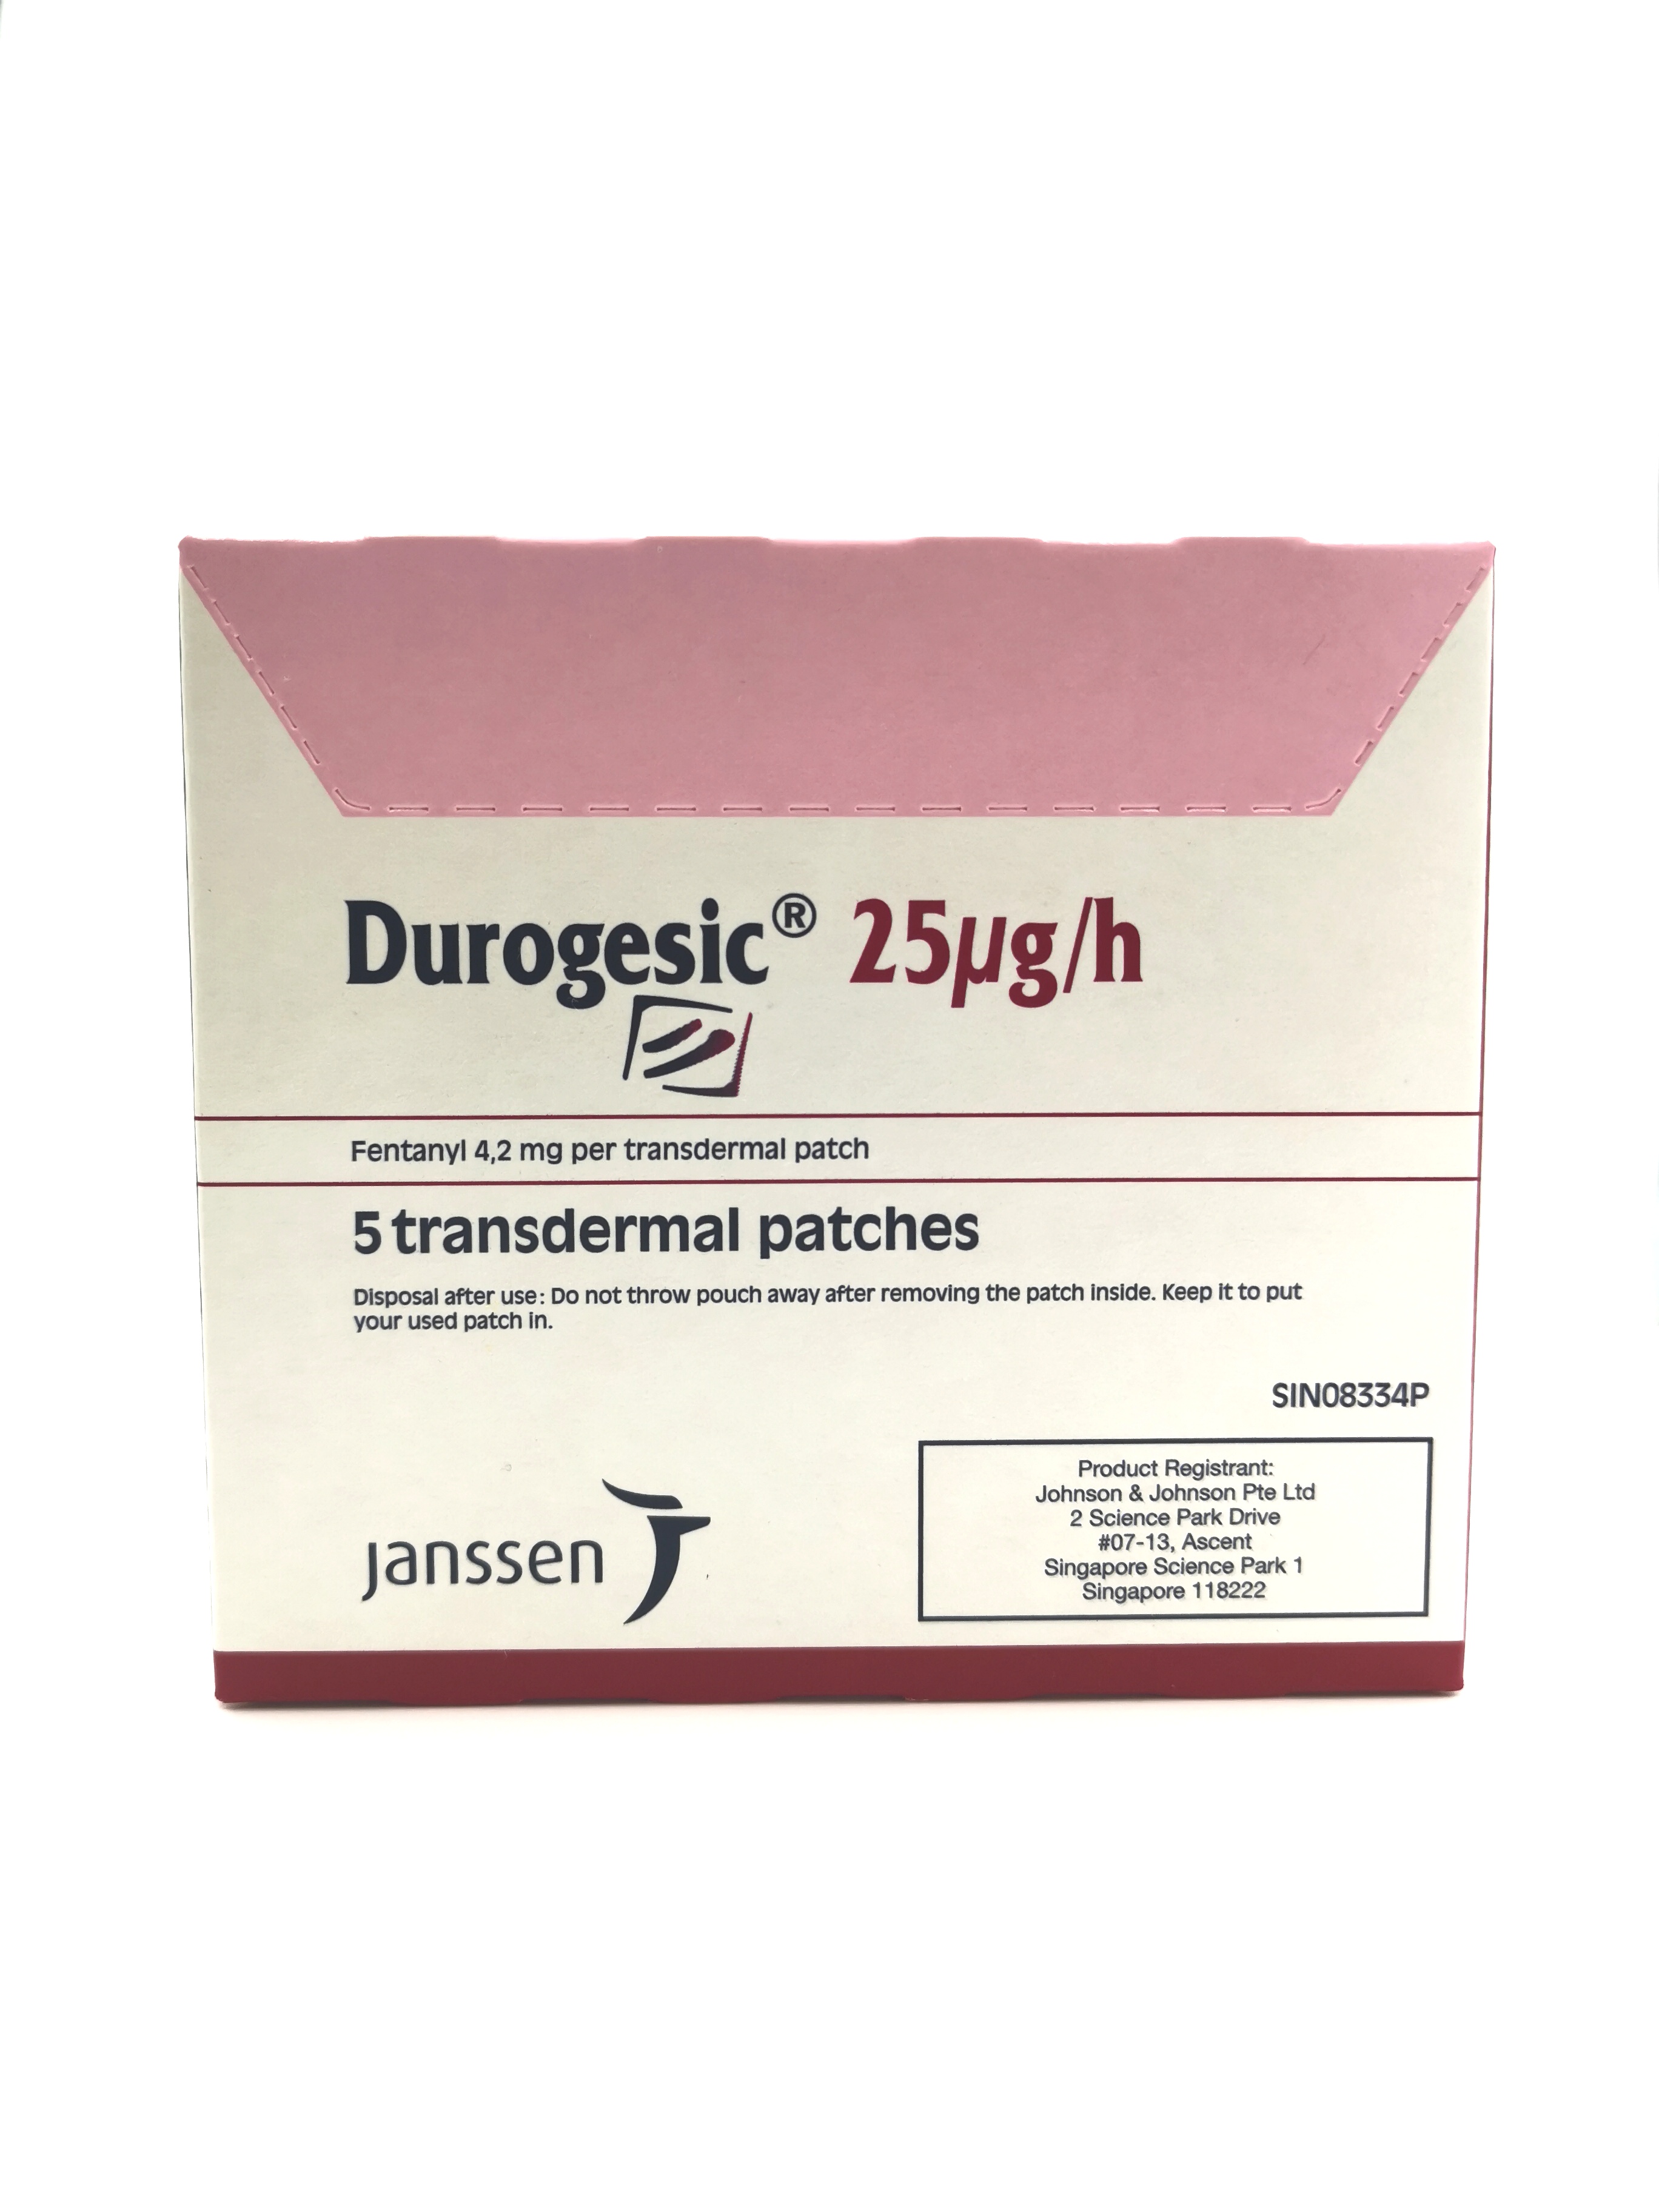 Jual Durogesic Patch Fentanil 25 mg di Seller Apotek Balanak - Kayu Manis,  Kota Jakarta Timur